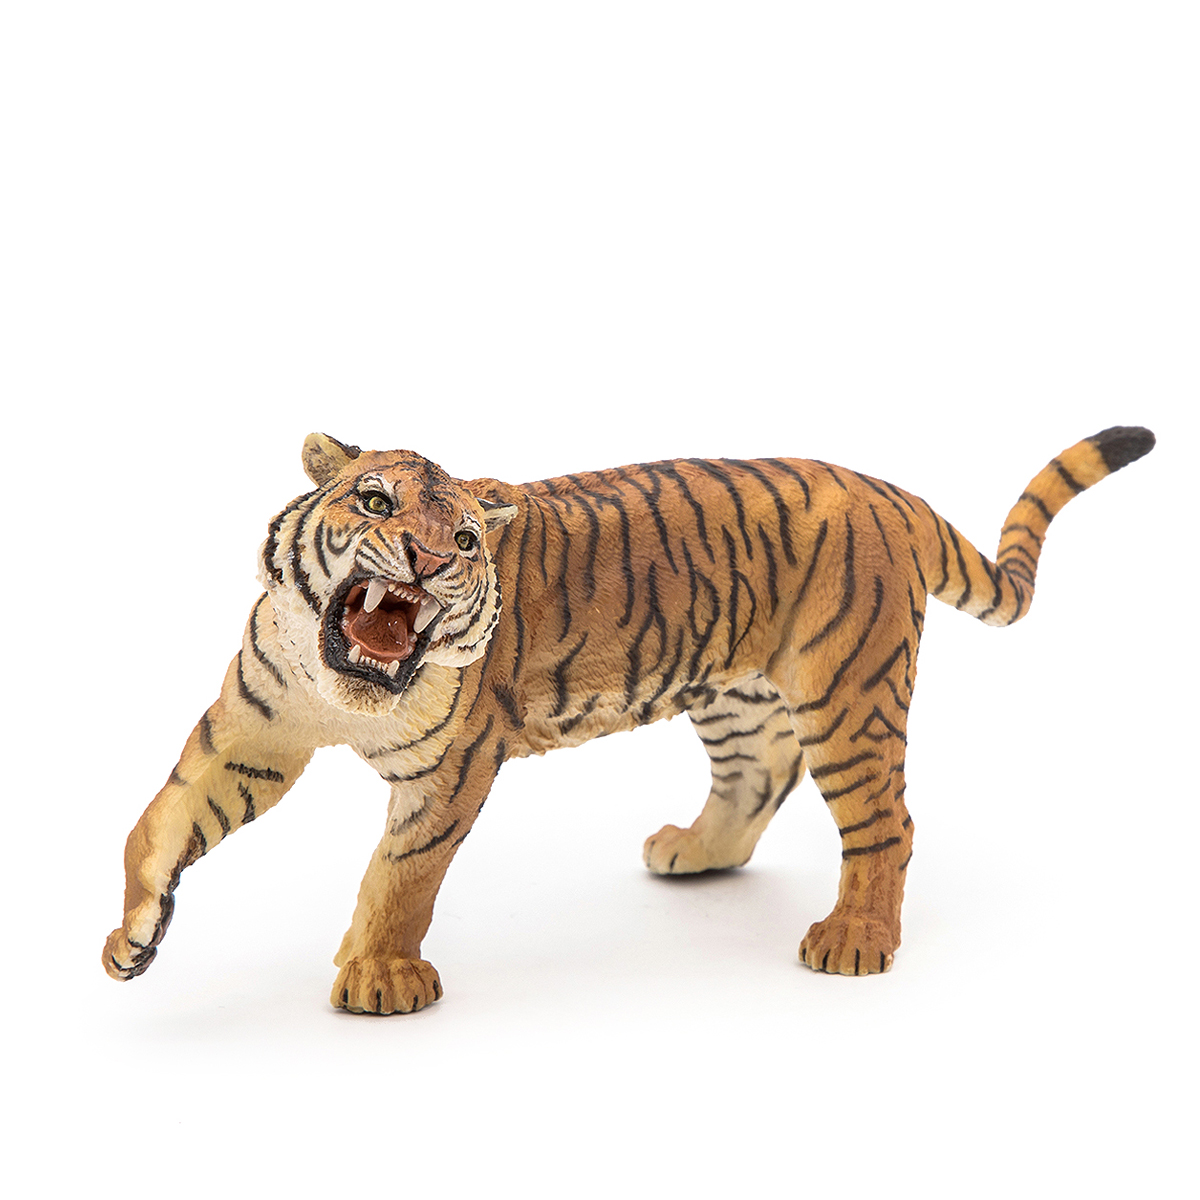 Rytande tiger 15 cm (Papo)